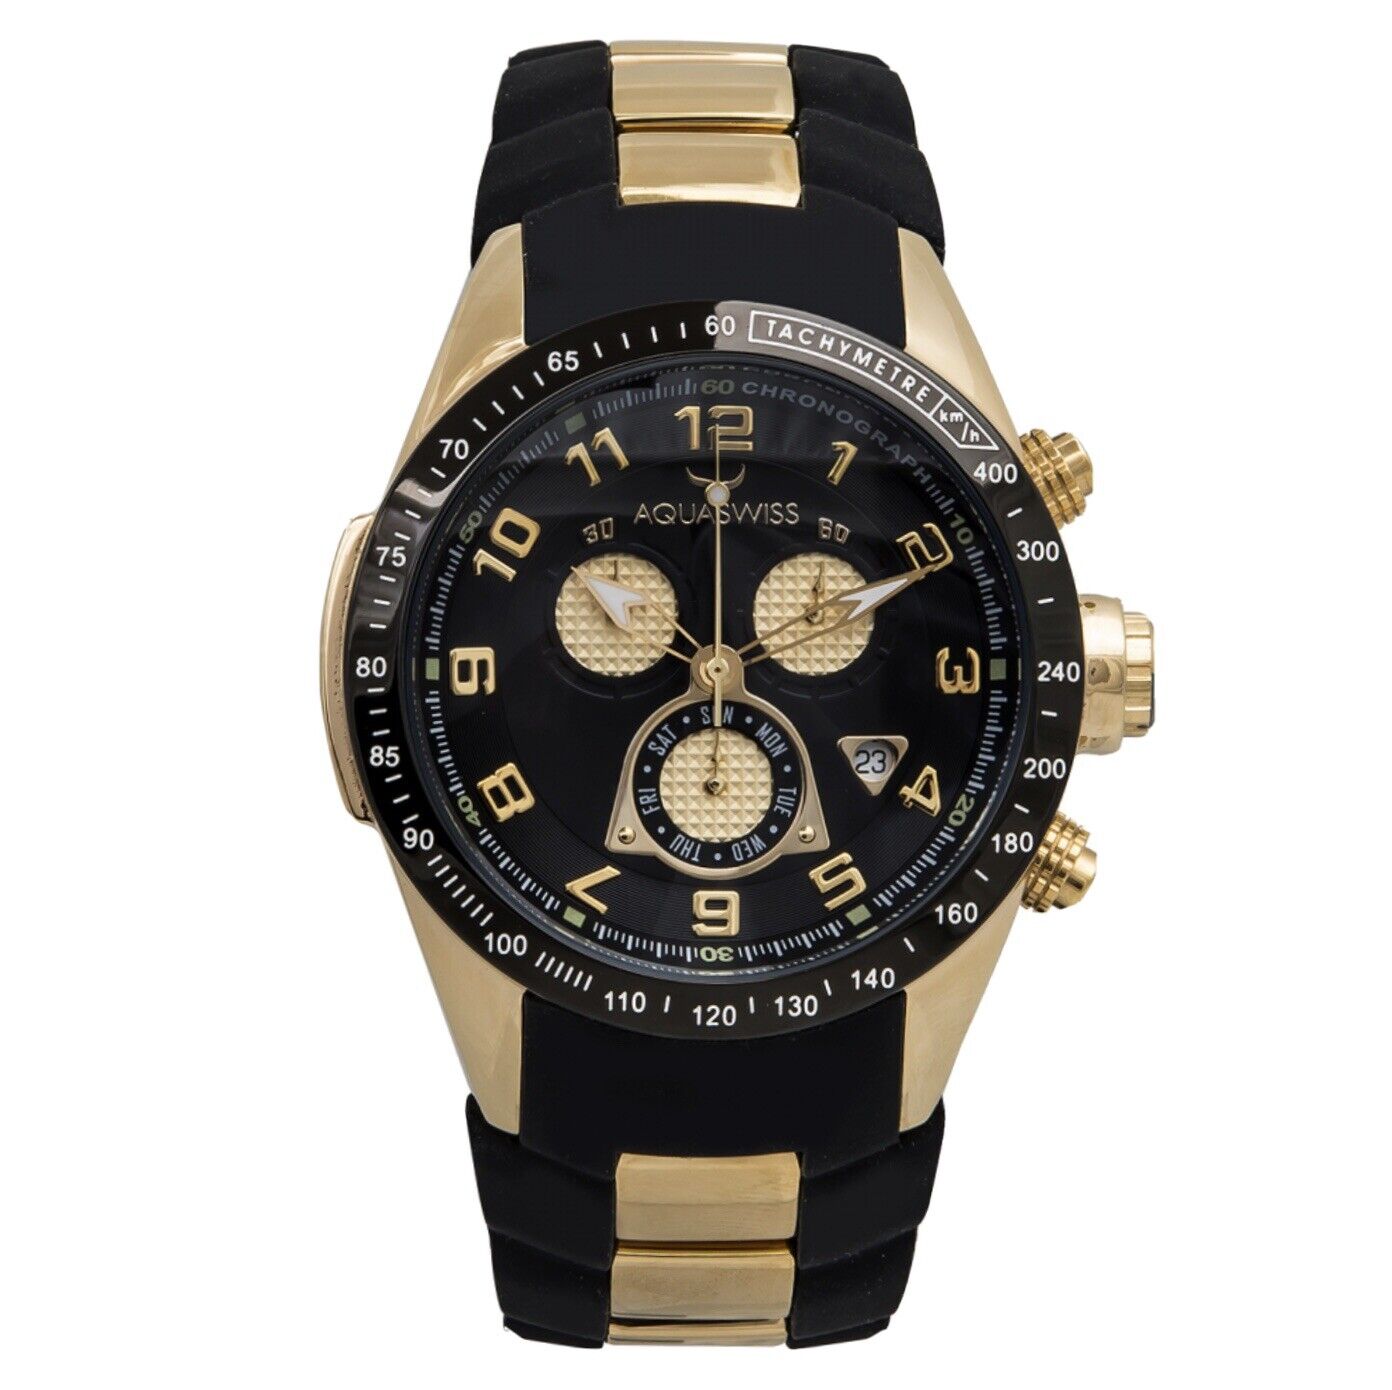 AQUASWISS "TRAX 6" Hand Men's Watch (New)MSRP $1,400.00. Model # 80G6H016.